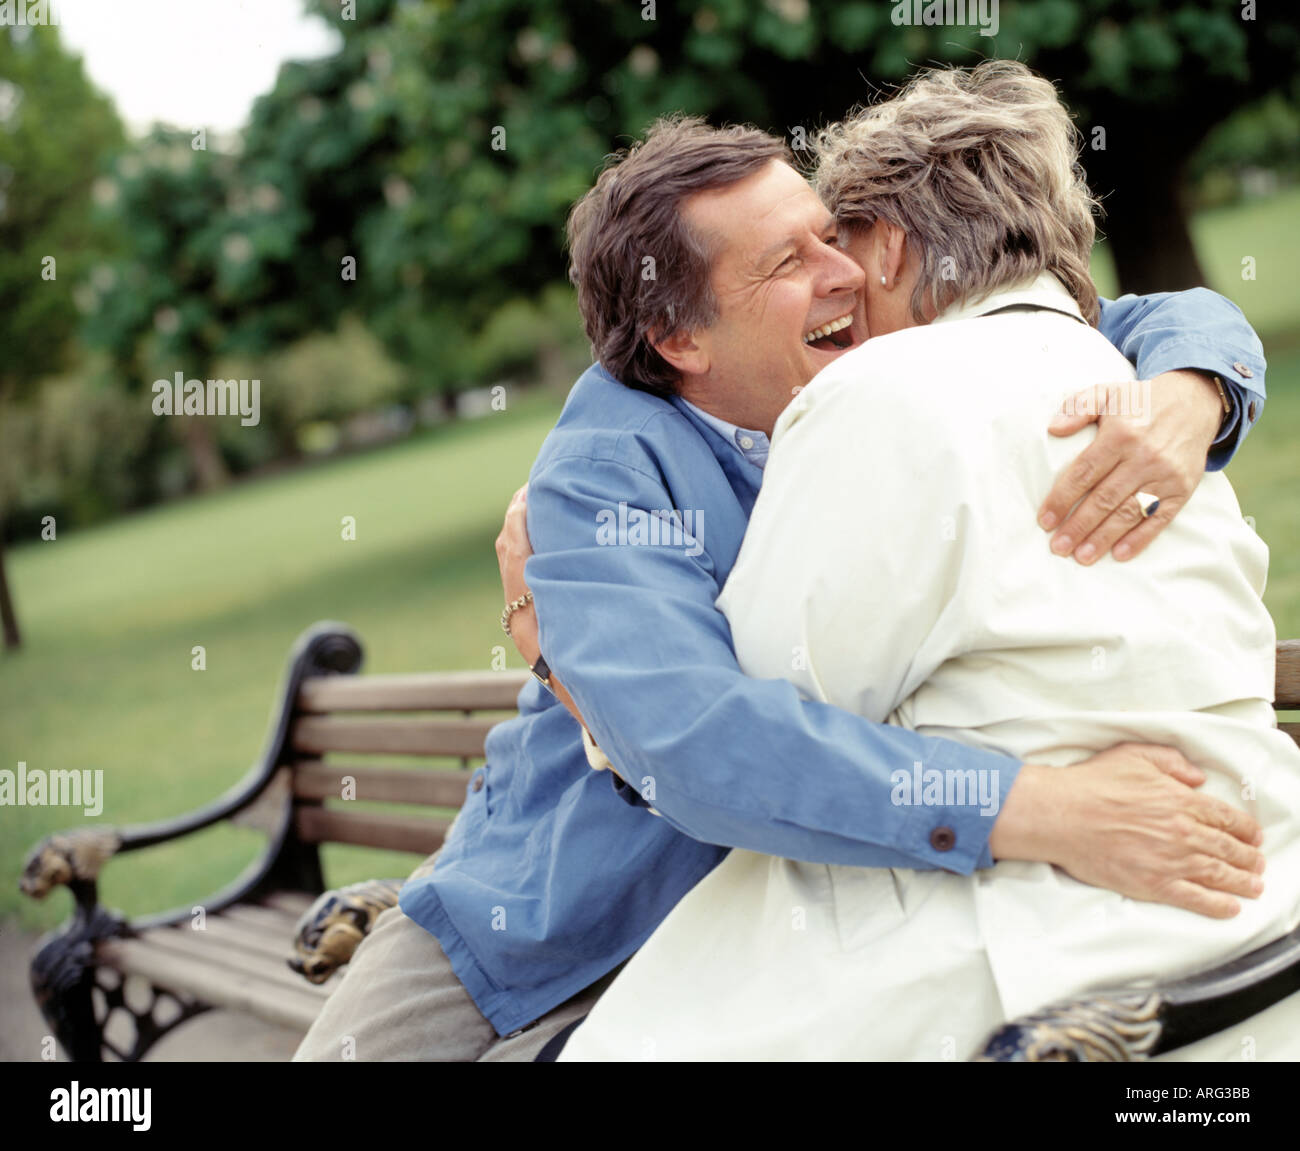 Moyen âge couple laughing et hugging on park bench Banque D'Images